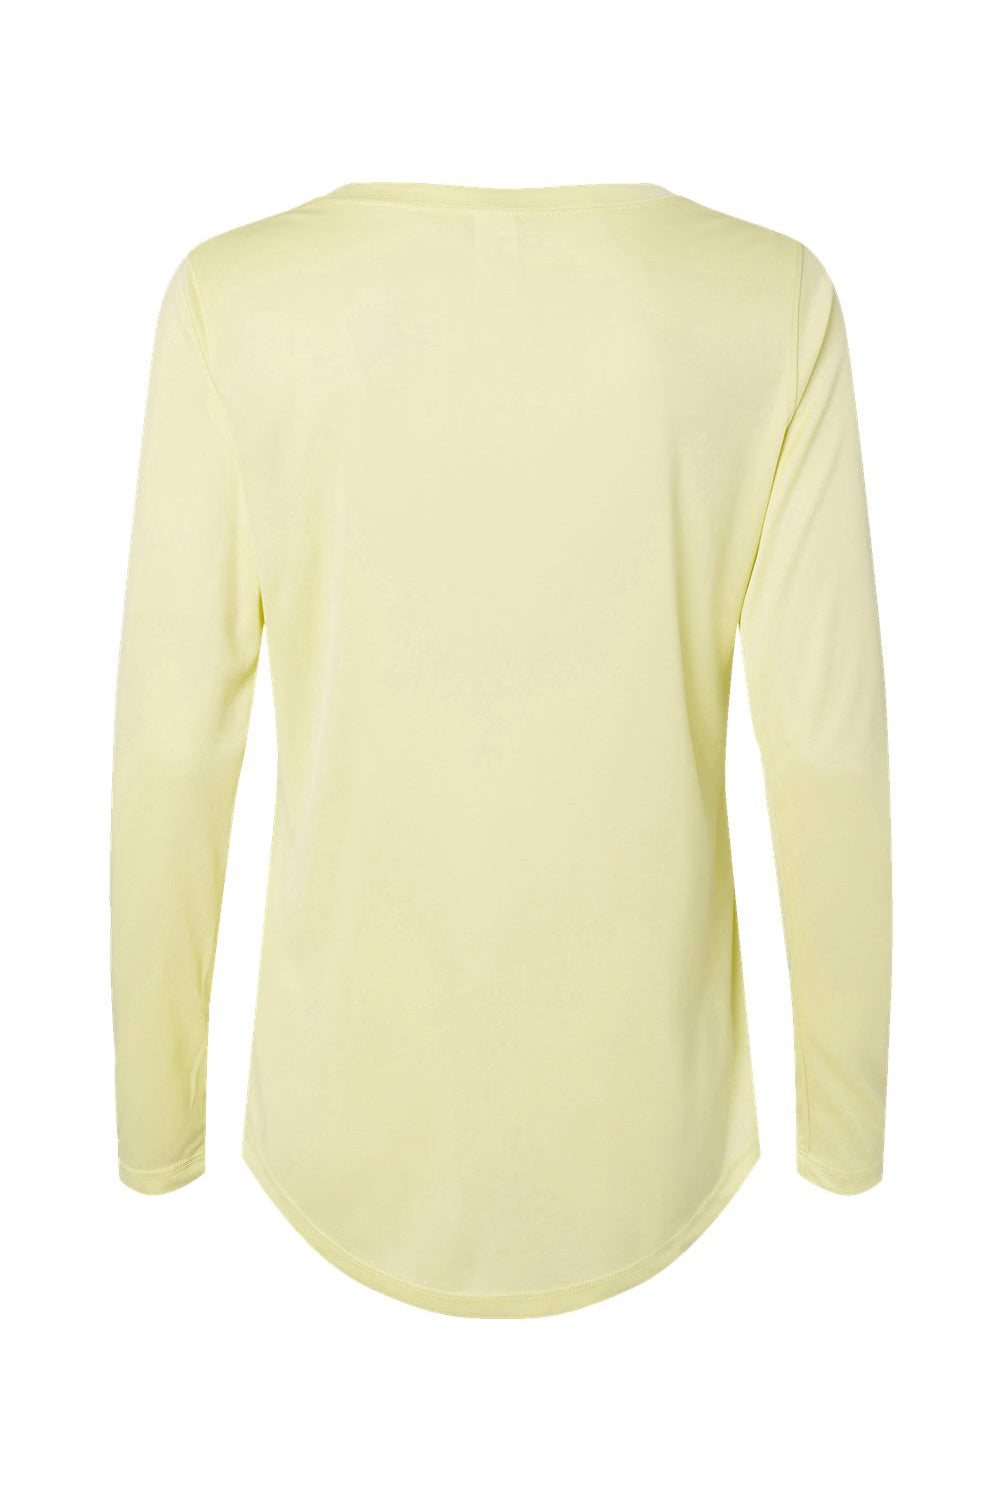 Paragon 214 Womens Islander Performance Long Sleeve Scoop Neck T-Shirt Pale Yellow Flat Back